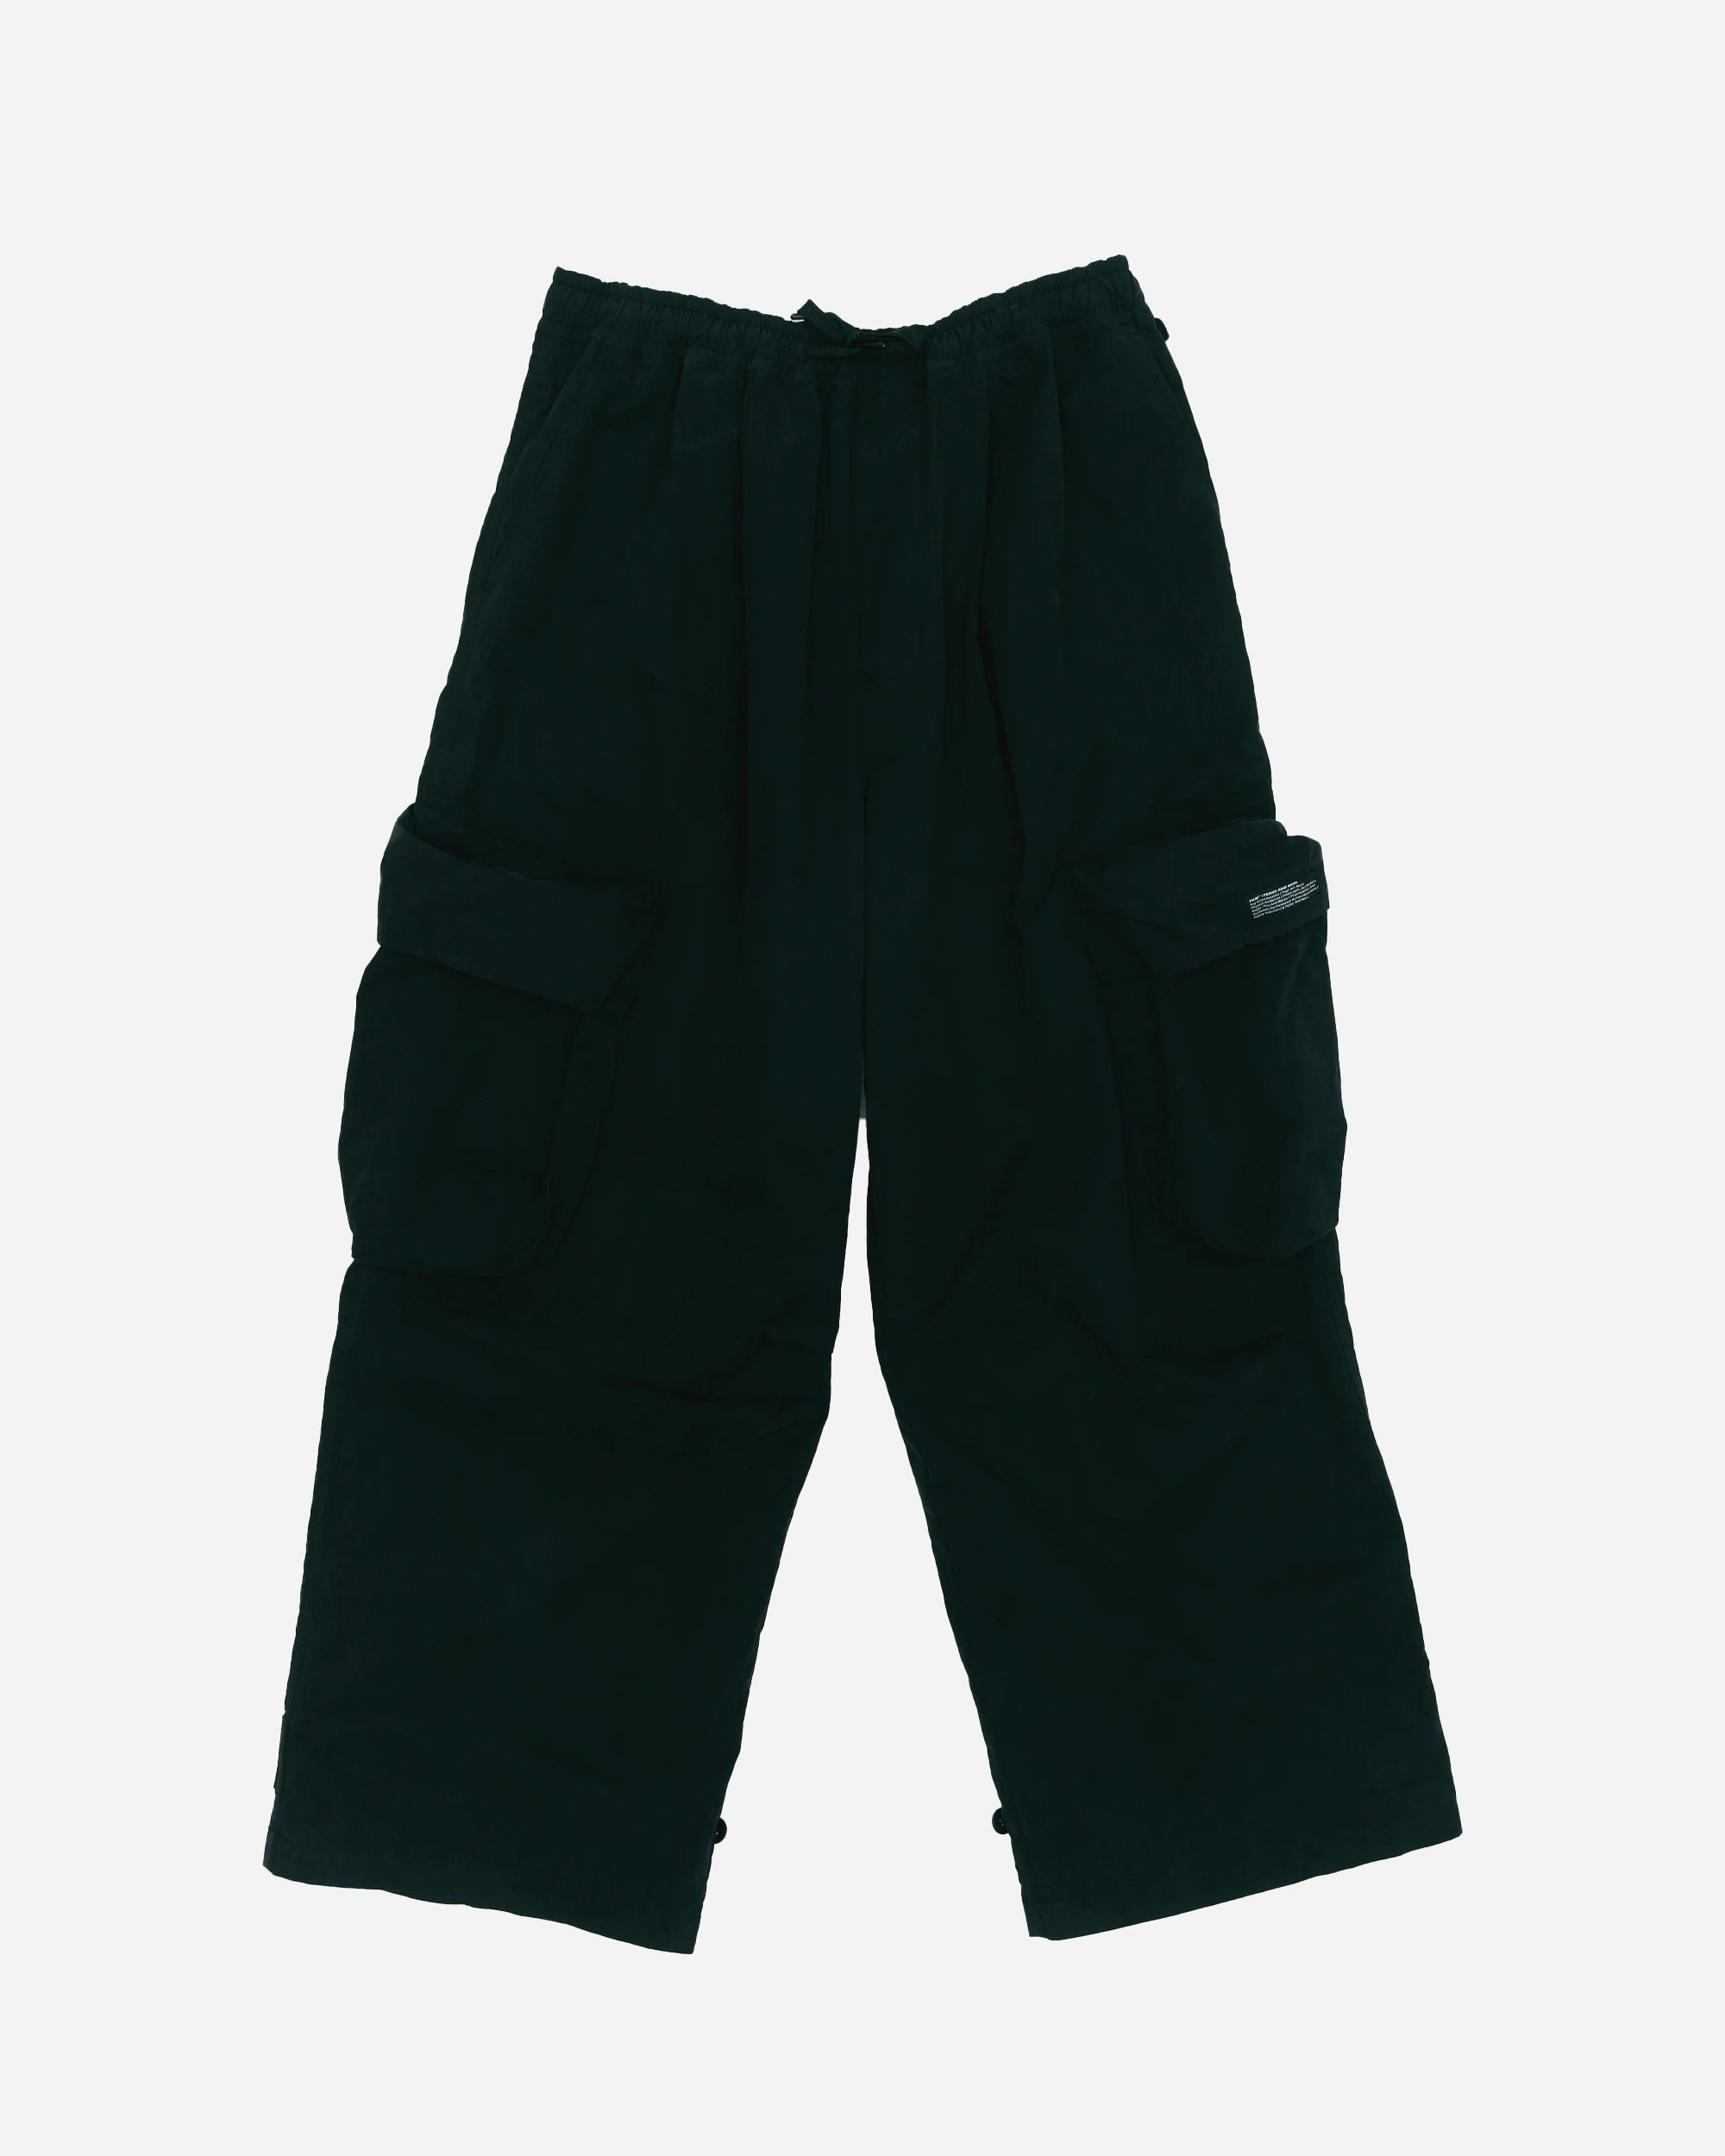 P.A.M Chow Pants BLACK 8555/A-B